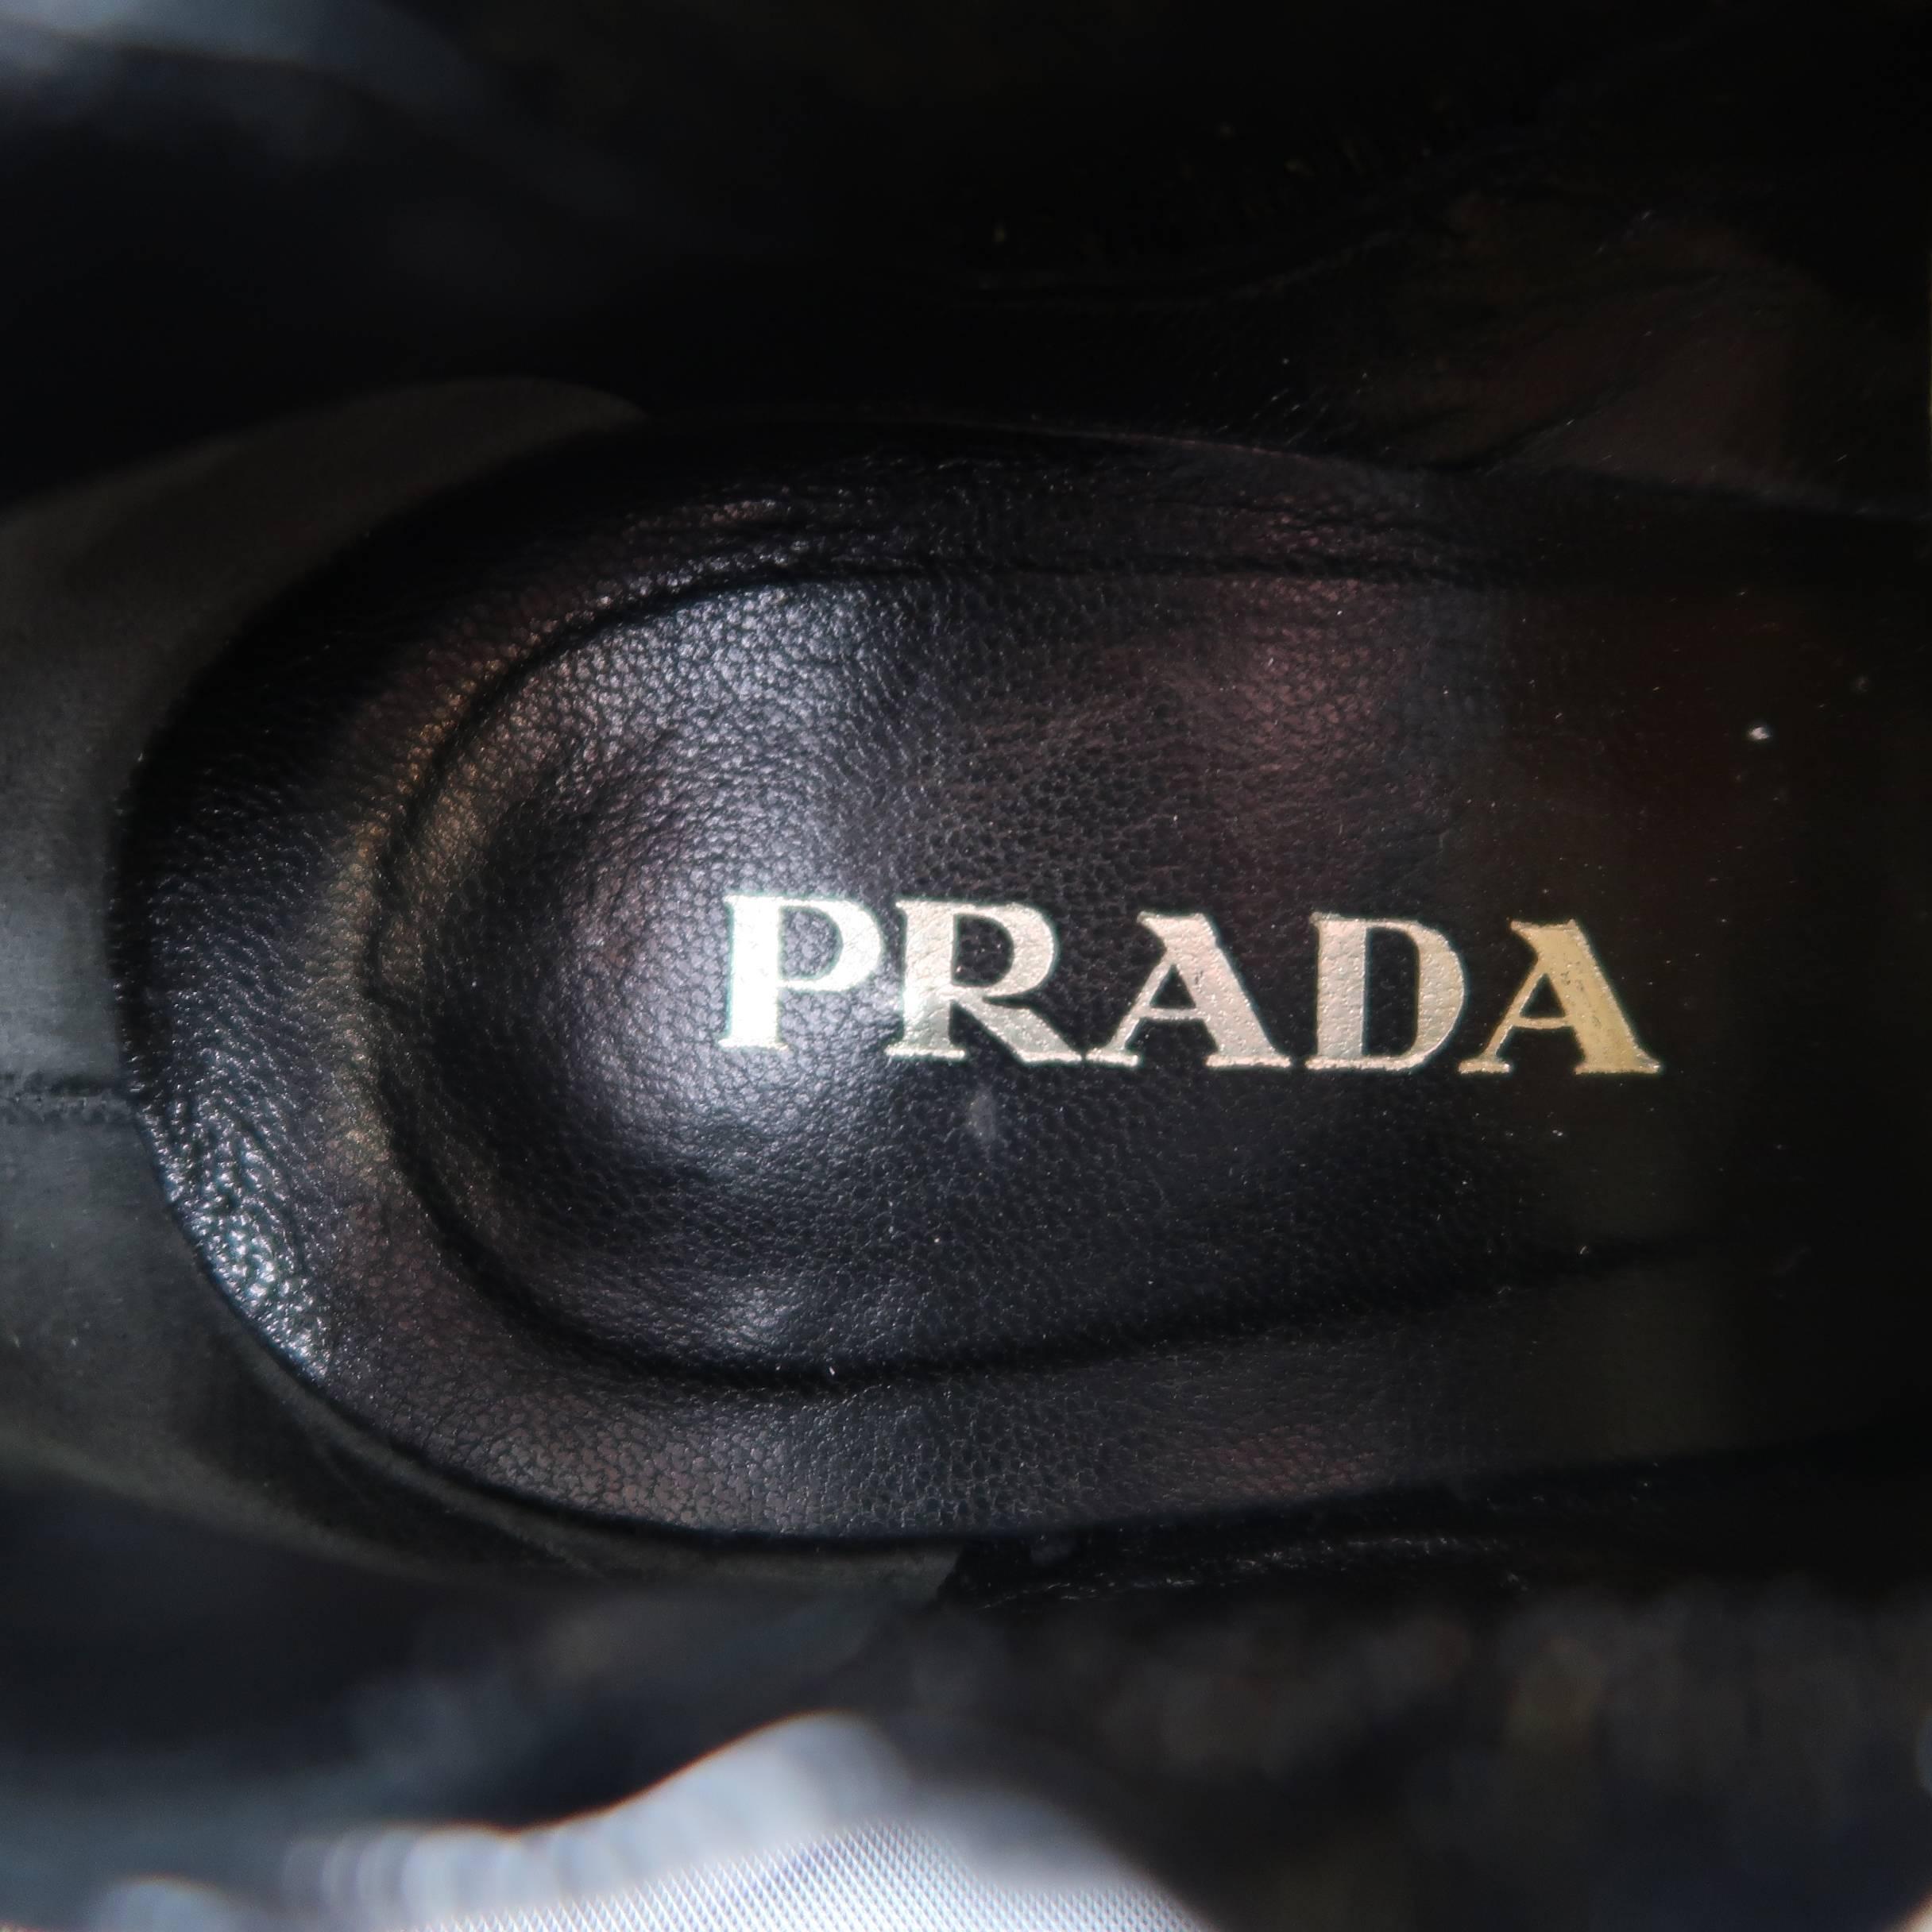 PRADA Size 7.5 Black Textured Patent Leather Pointed Kitten Heel Booties 3